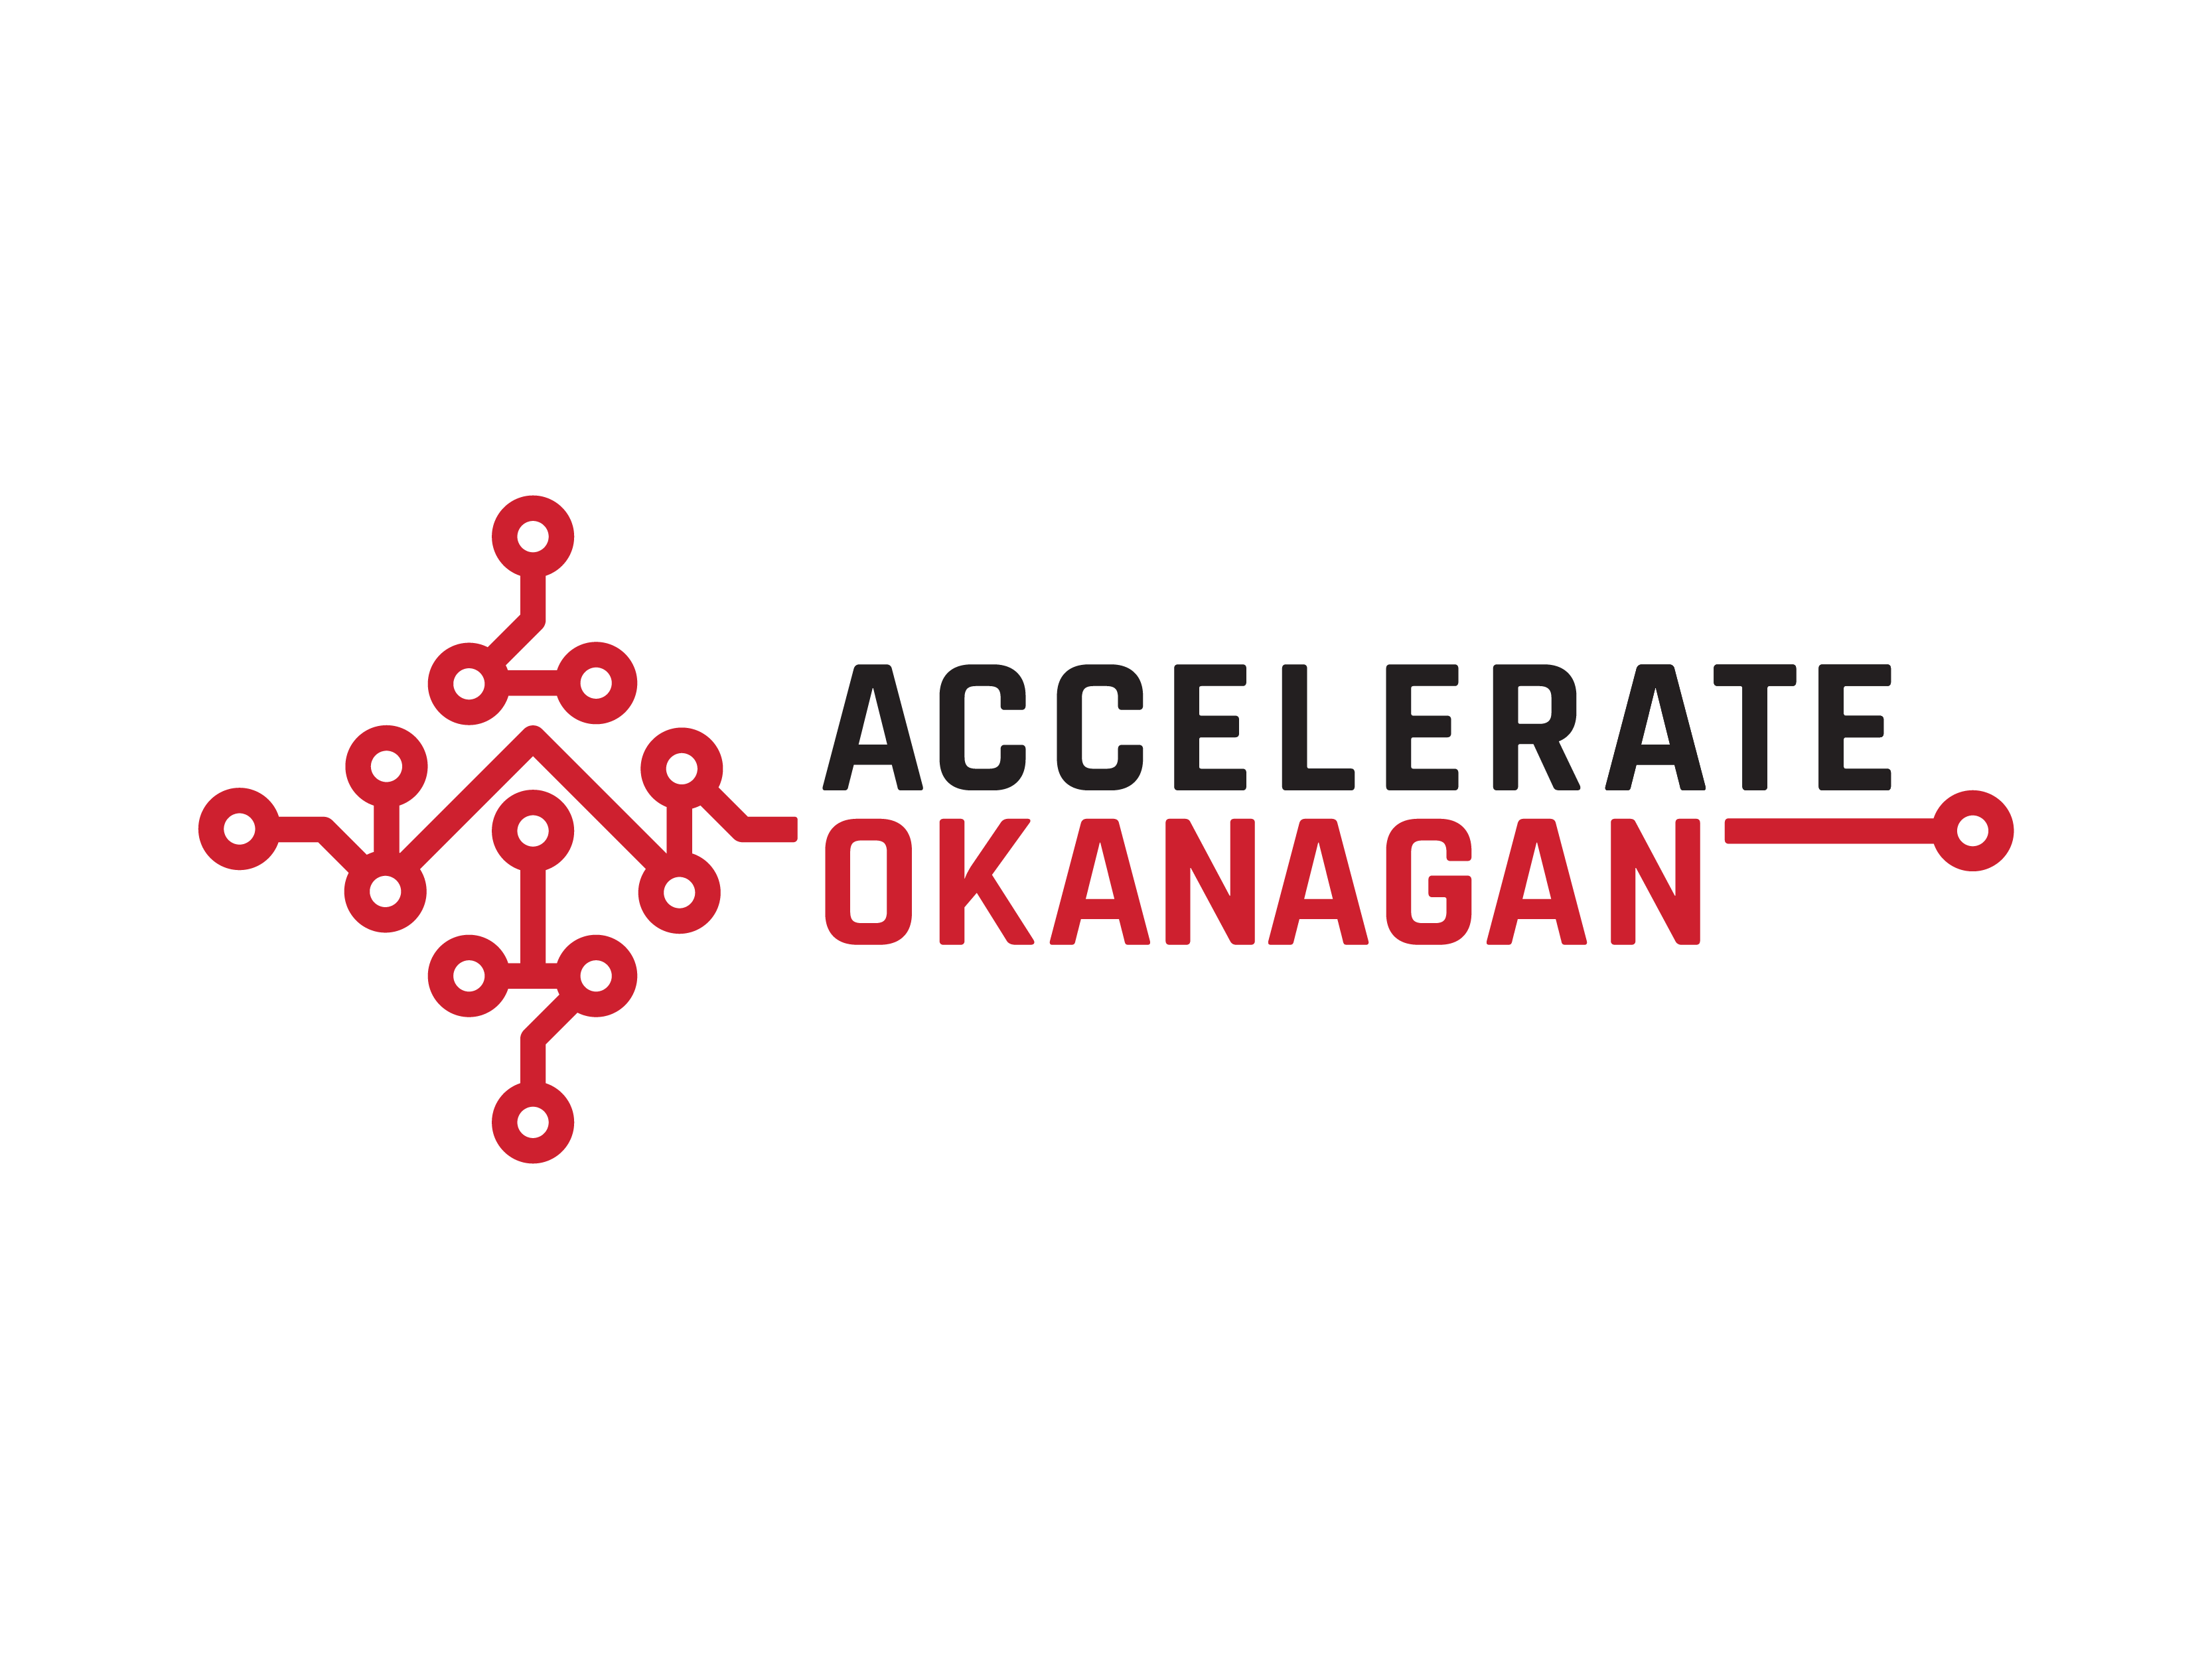 Accelerate Okanagan - Case Study